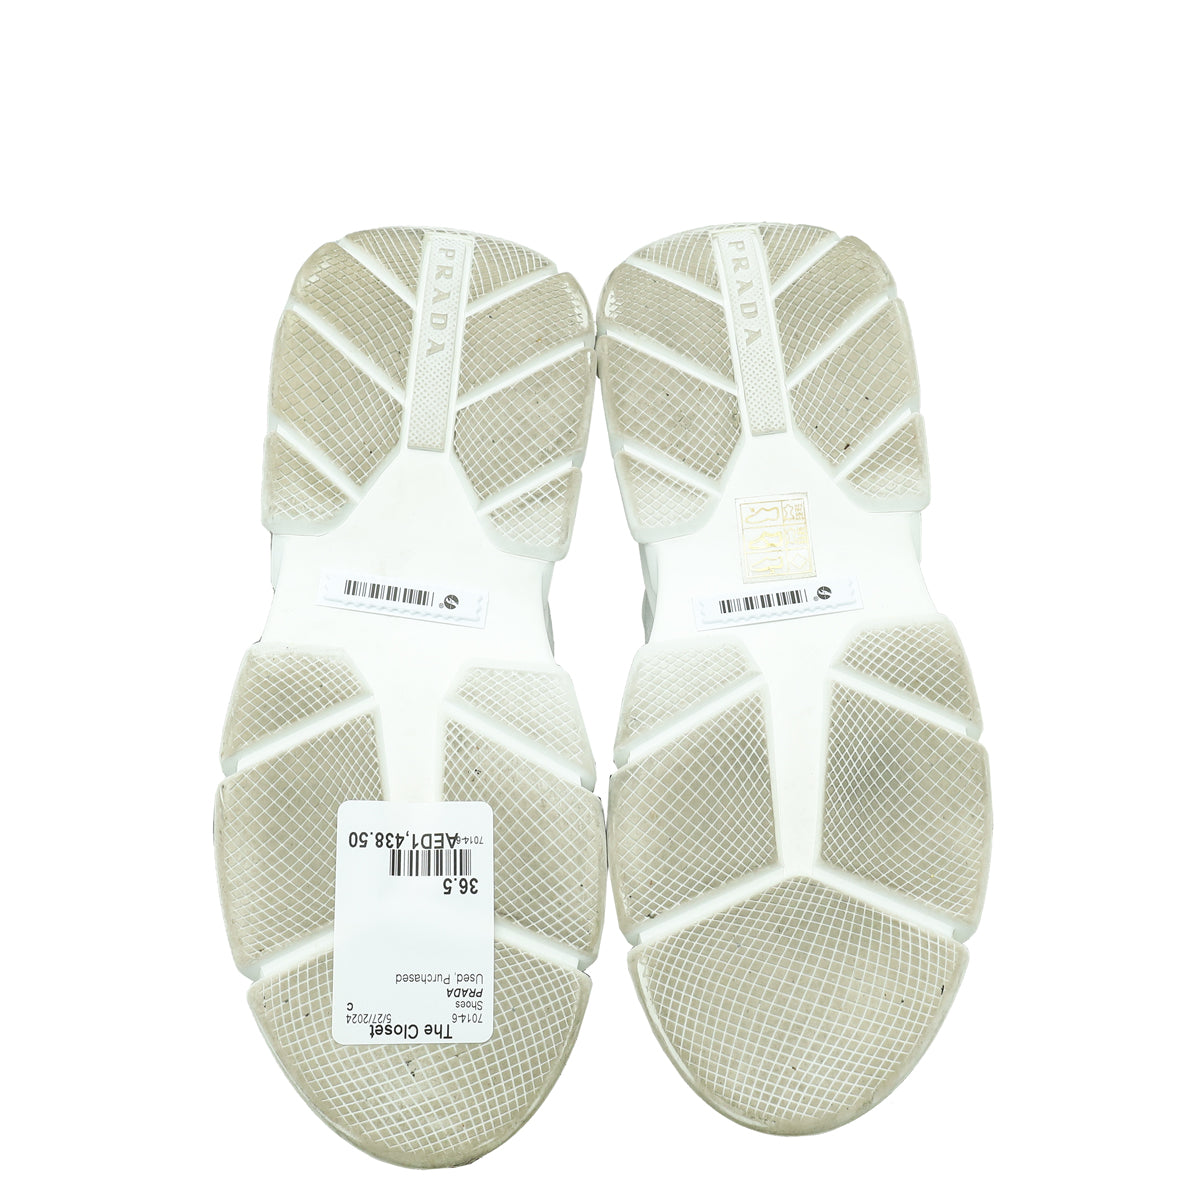 Prada White Triangle Logo Knit Fabric Sneakers 36.5